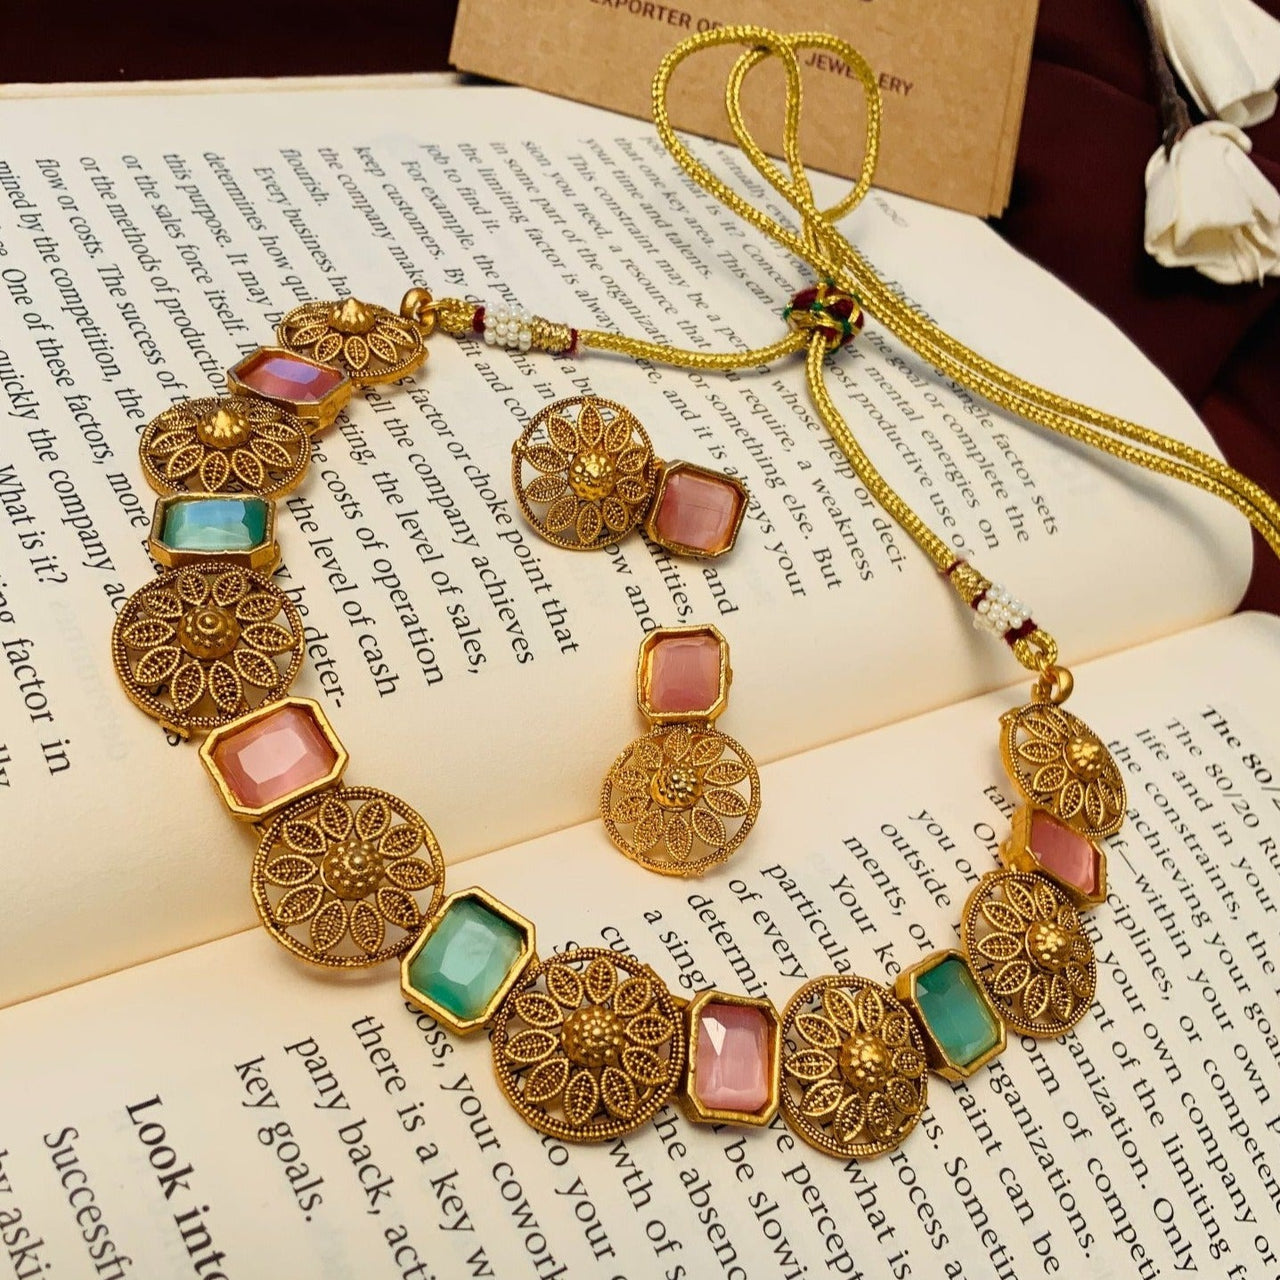 Cherished Floral Pattered Stone Necklace Set - Abdesignsjewellery